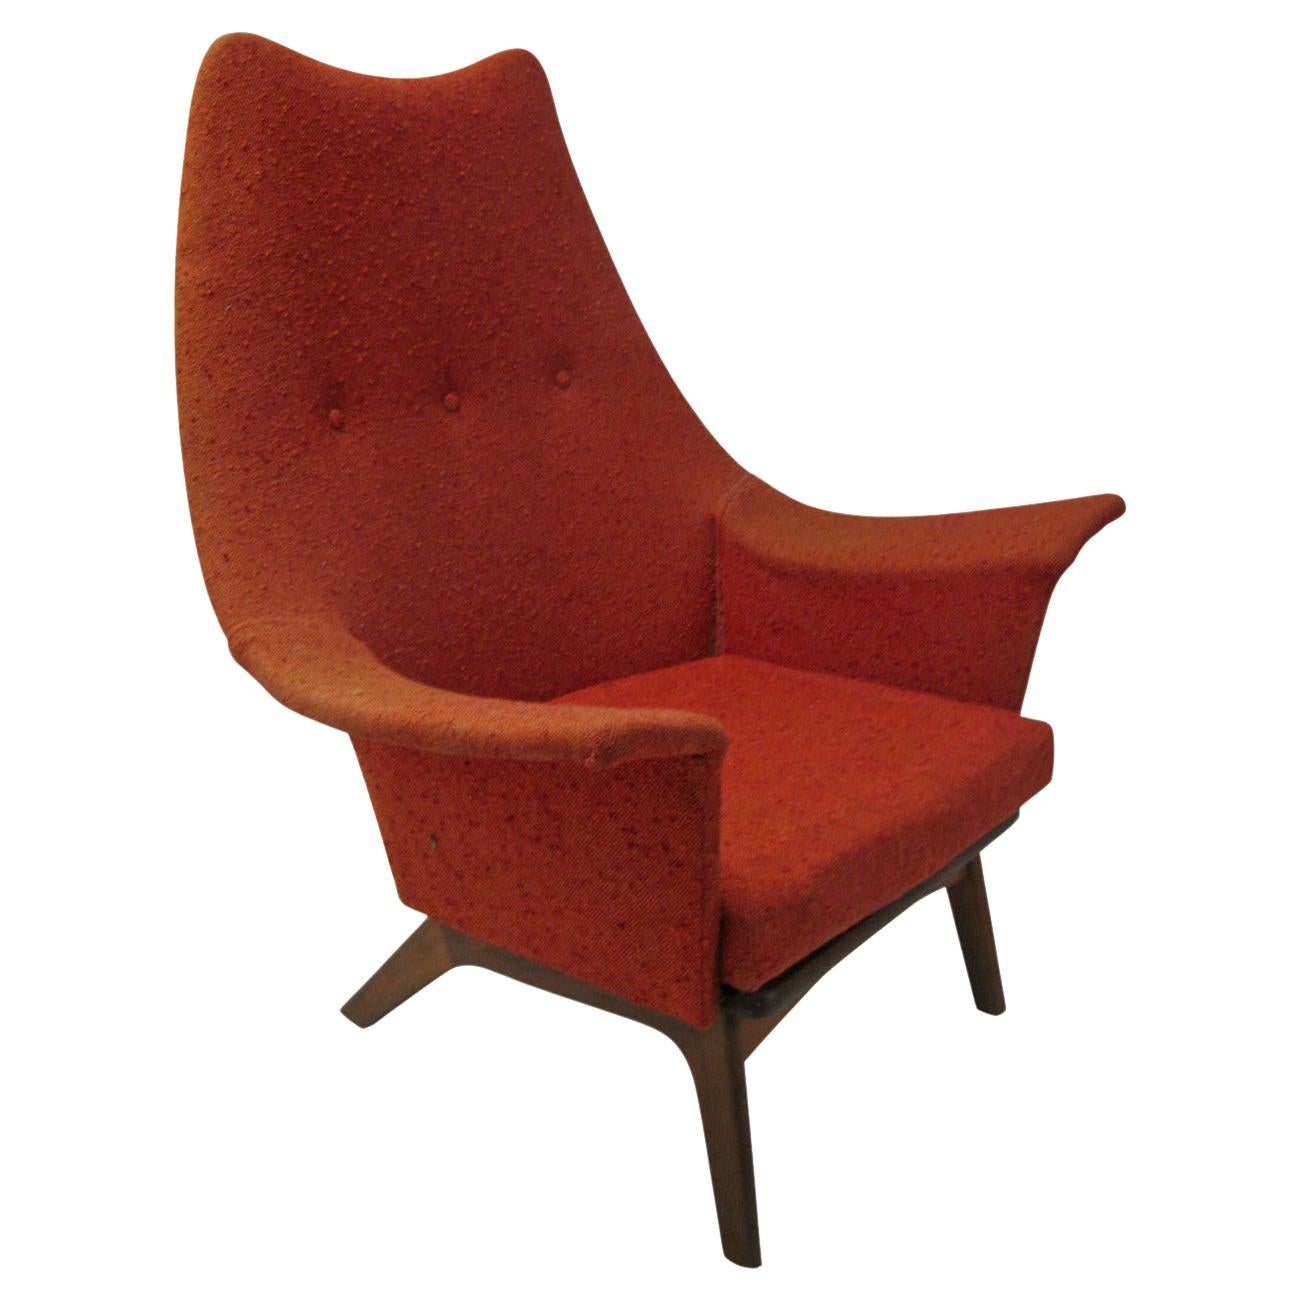 The Moderns Modernity Wing Chair par Adrian Pearsall en vente